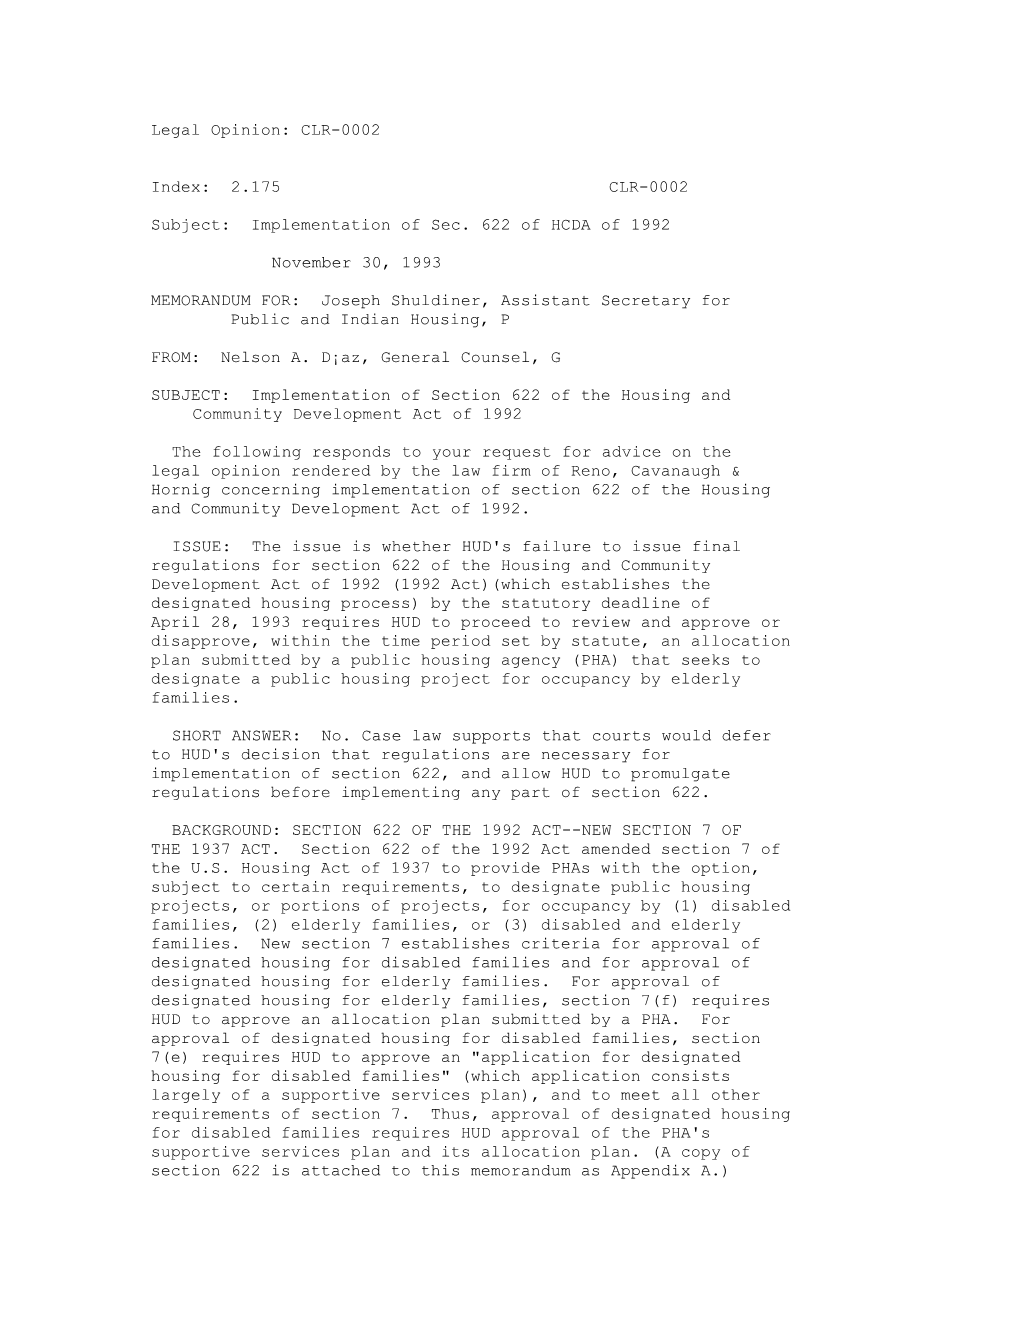 Subject: Implementation of Sec. 622 of HCDA of 1992